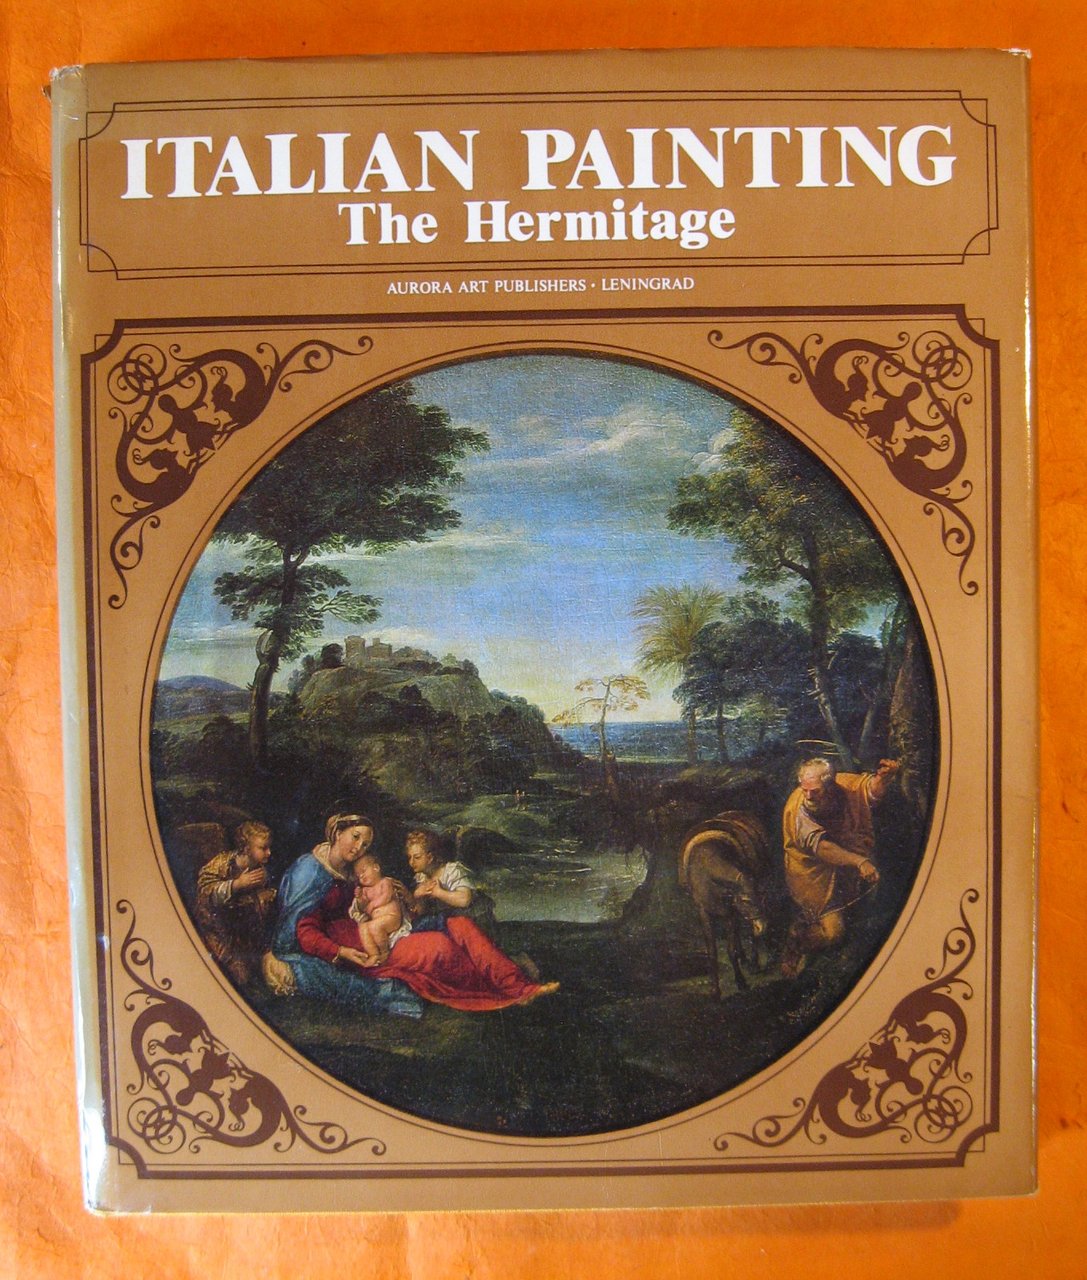 Italian Painting: The Hermitage